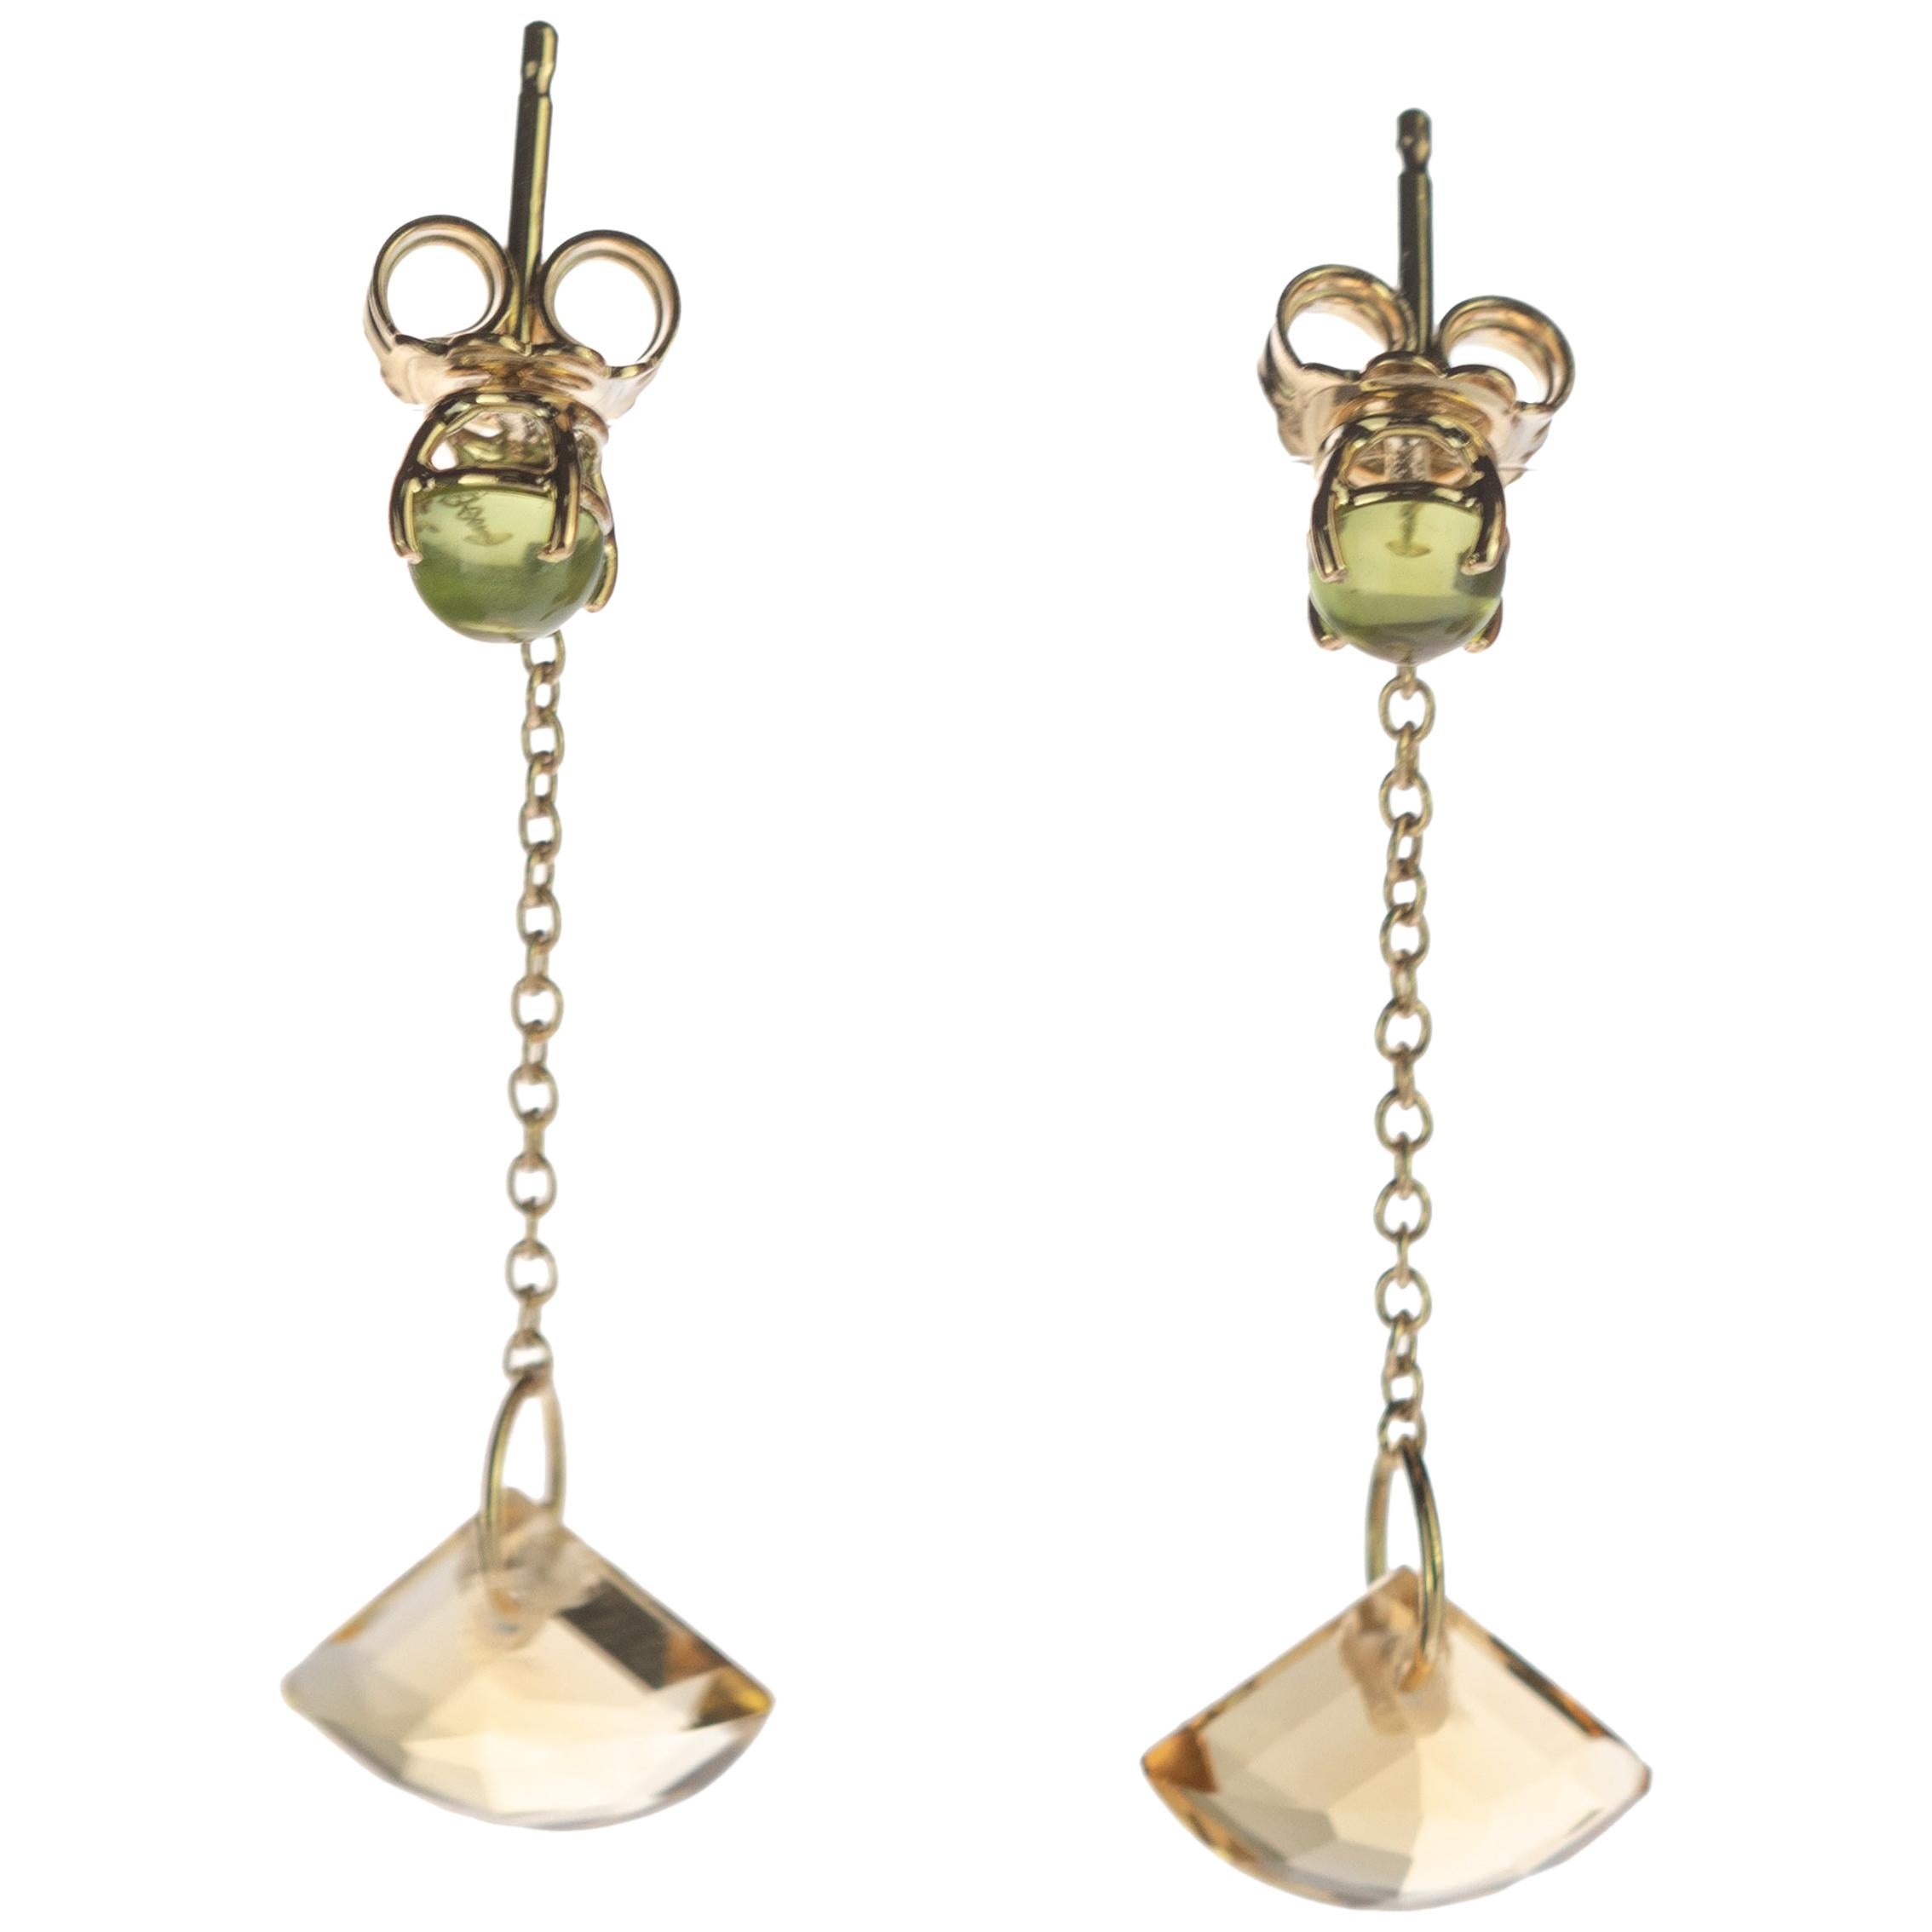 Citrine Quartz Peridot 18 Karat Gold Geometric Modern Cocktail Dangle Earrings